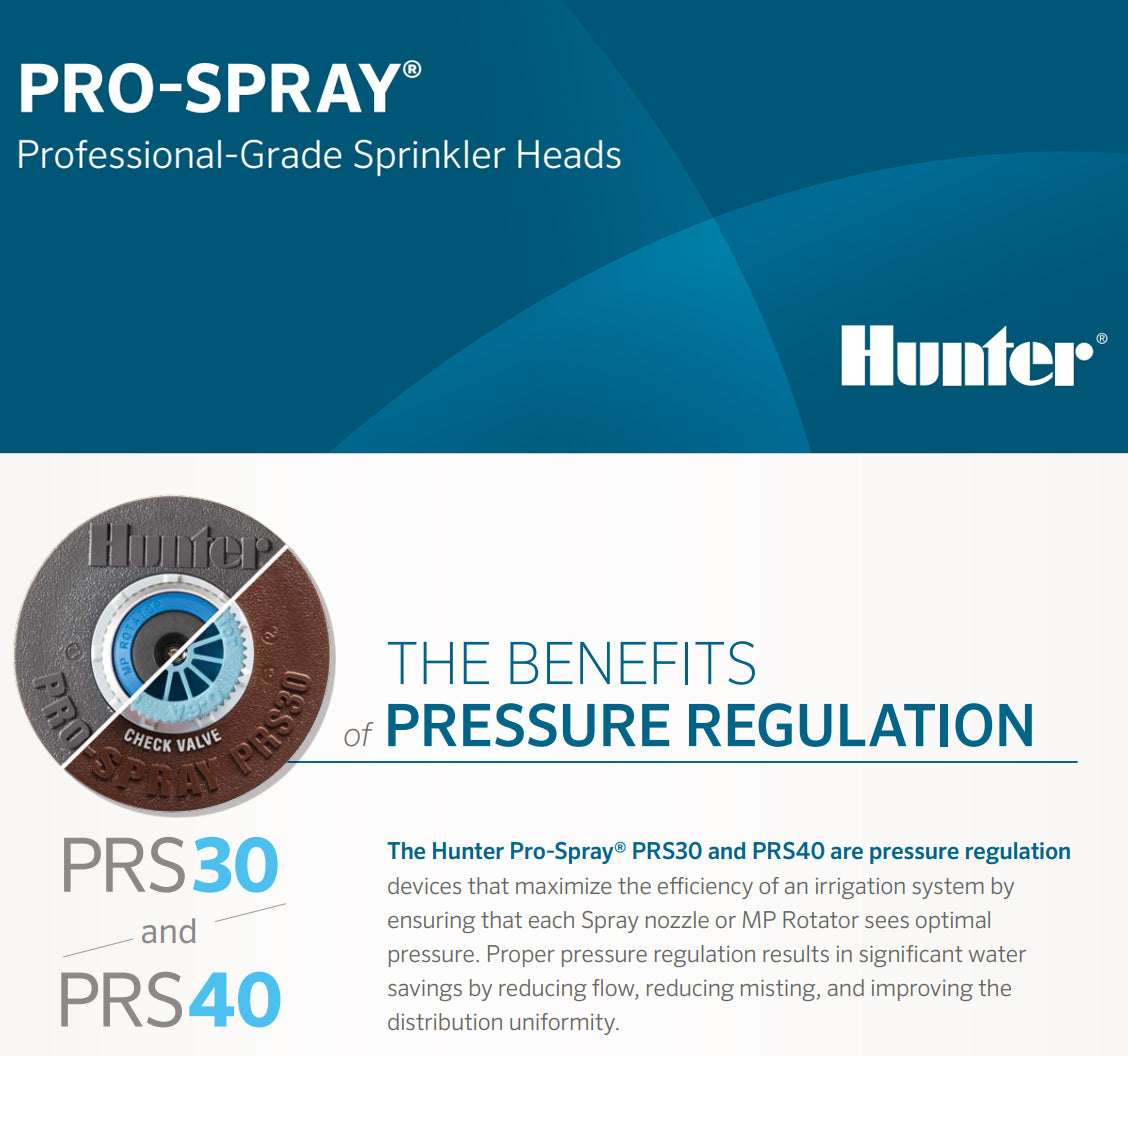 PROS-04-PRS40-CV - 4" Pop-up Pro Spray Professional Grade 40 PSI Sprinkler Head with Drain Check Valve